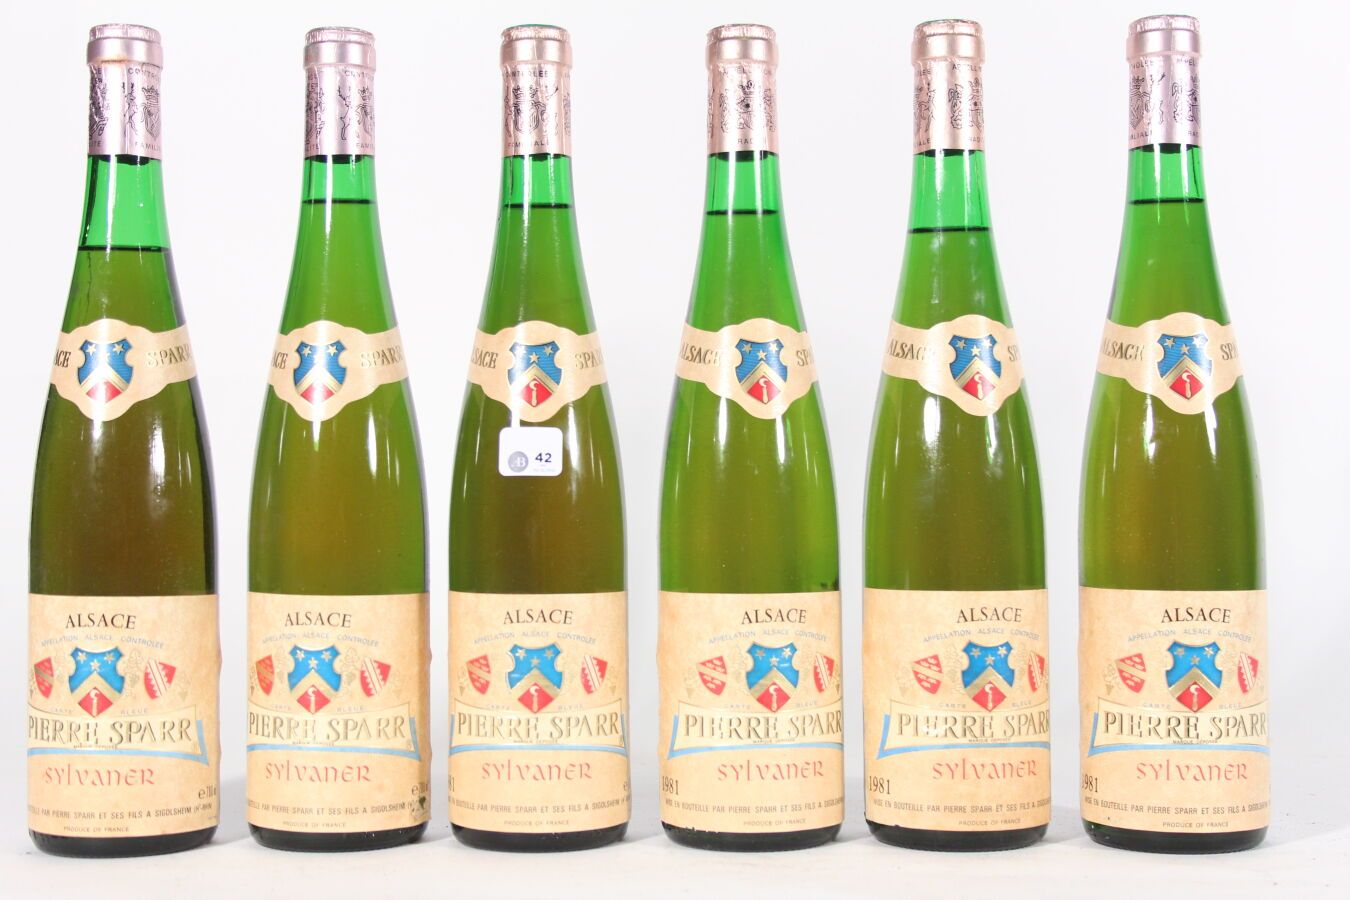 Null 1981 - Pierre Sparr
Alsace Sylvaner Blanc - 6 blles